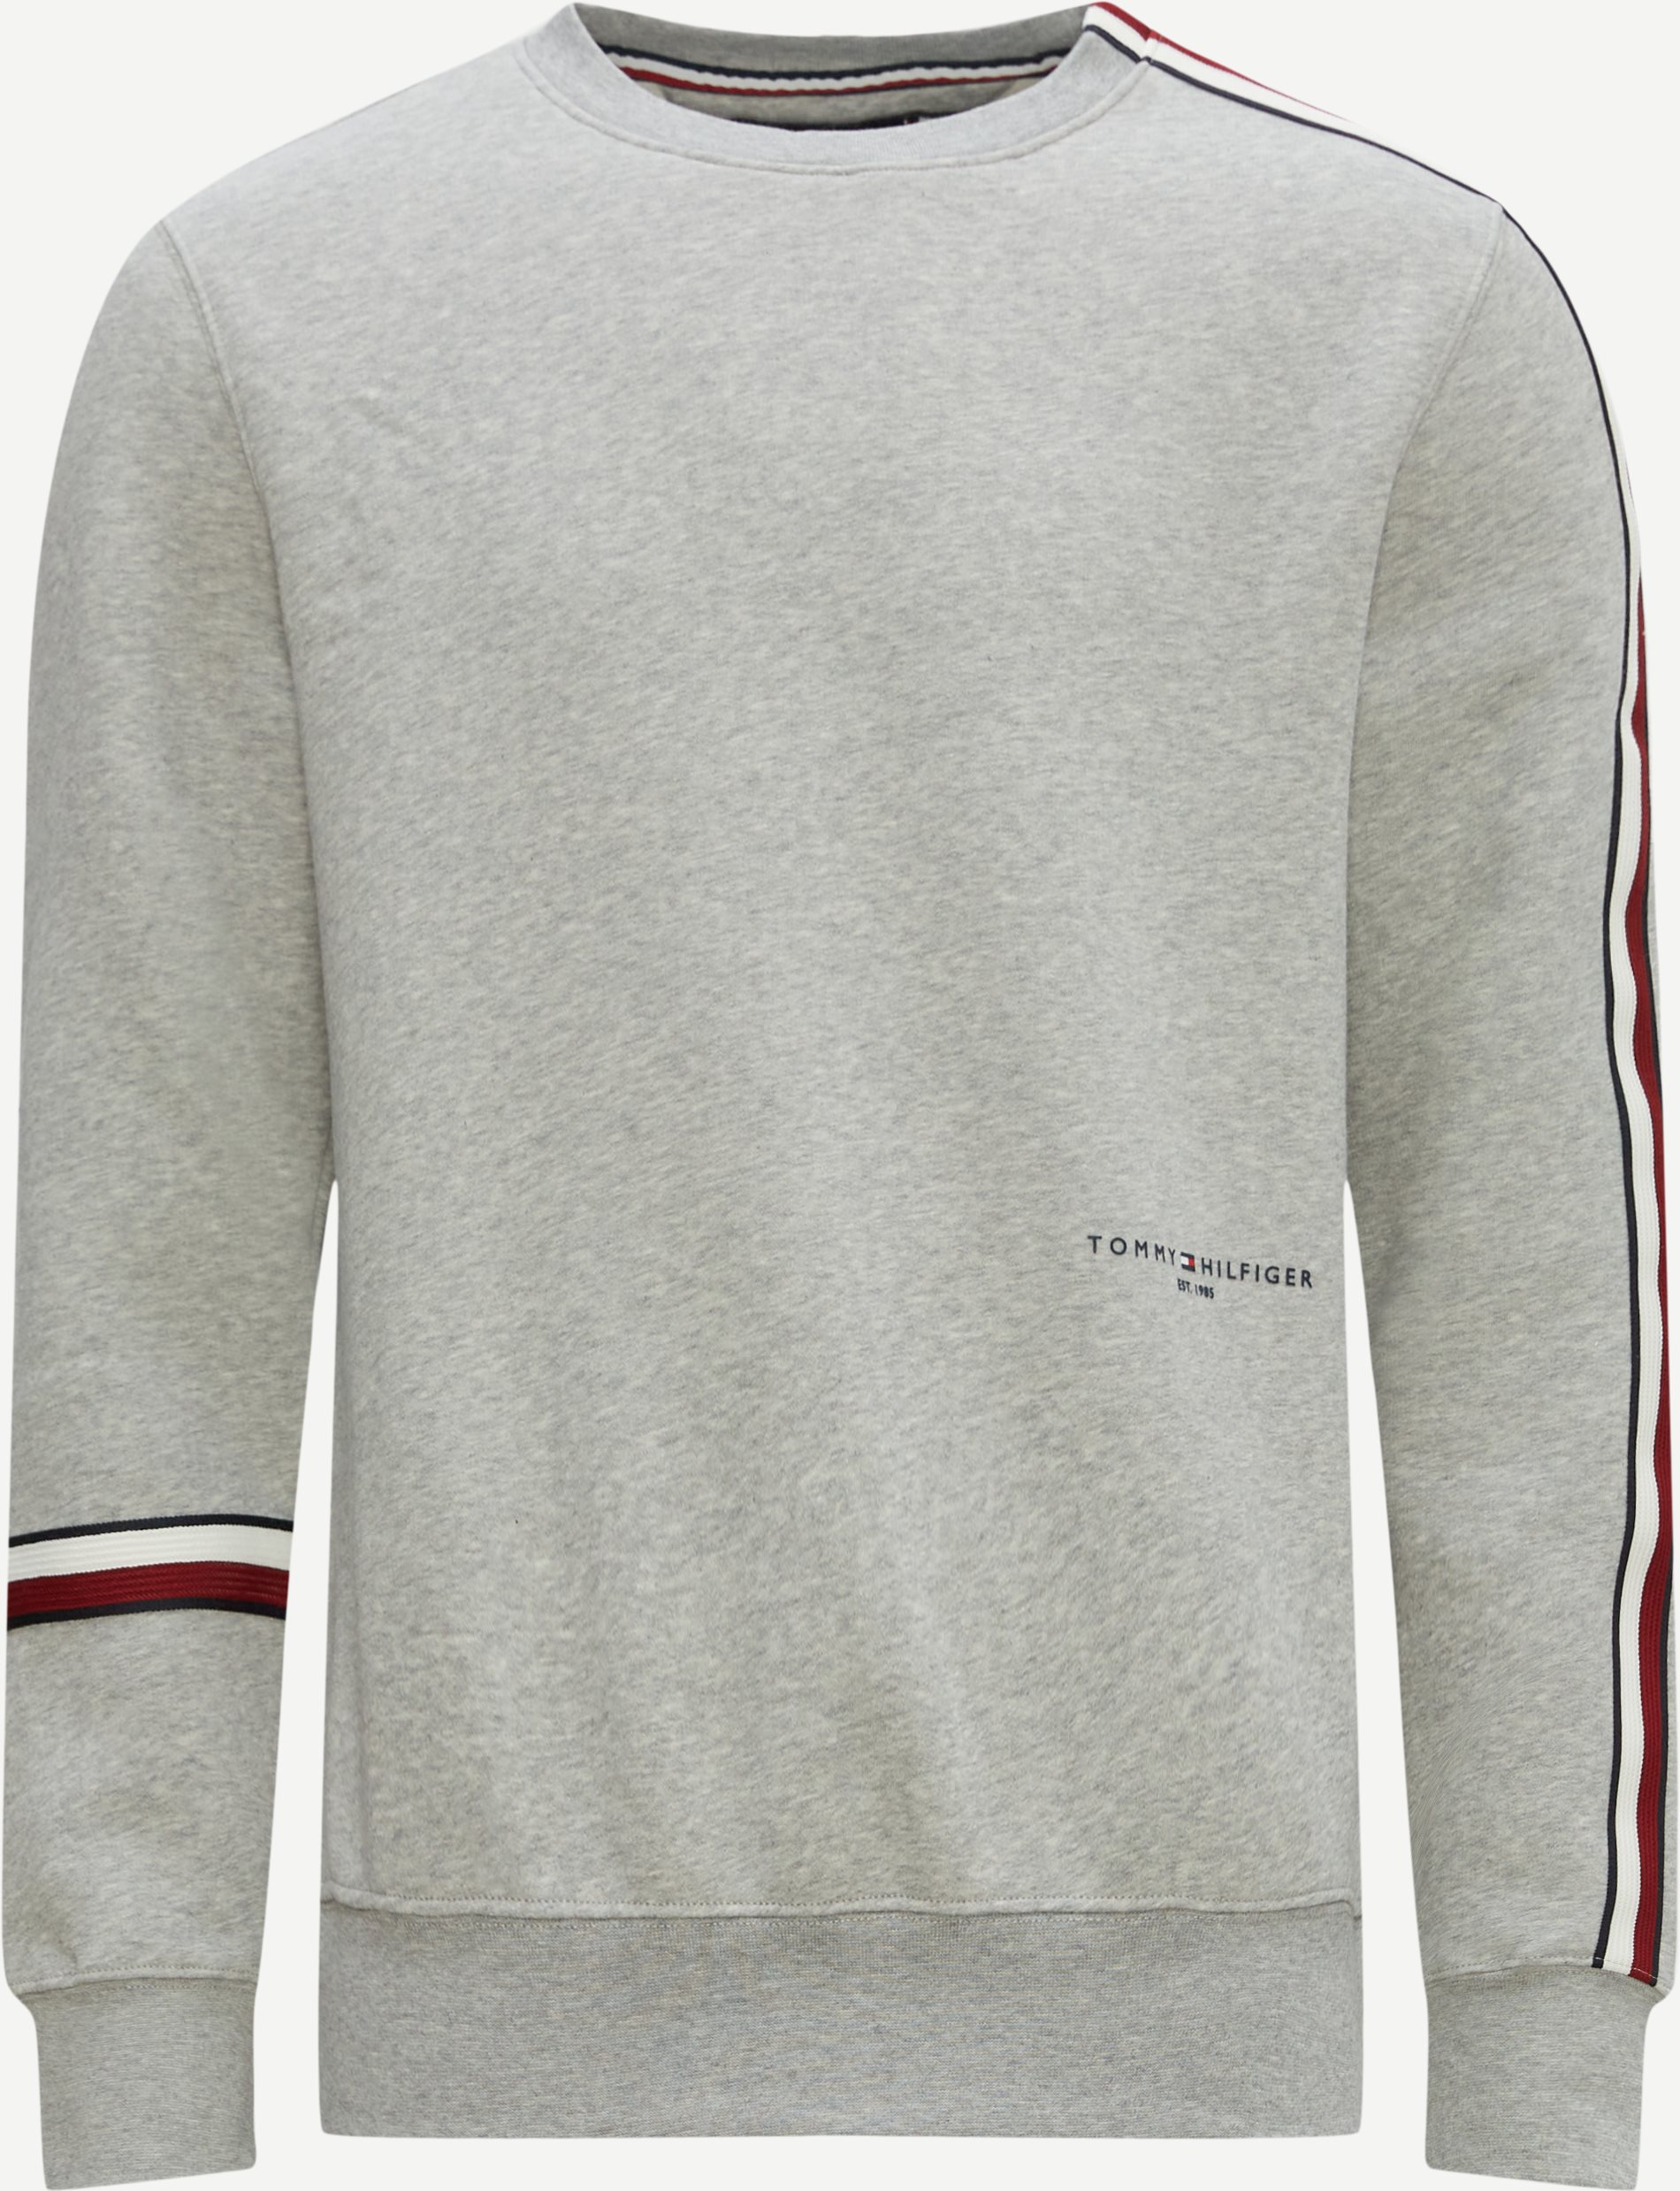 Tommy Hilfiger Sweatshirts 29344 NEW GLOBAL STRIP CREWNECK Grey